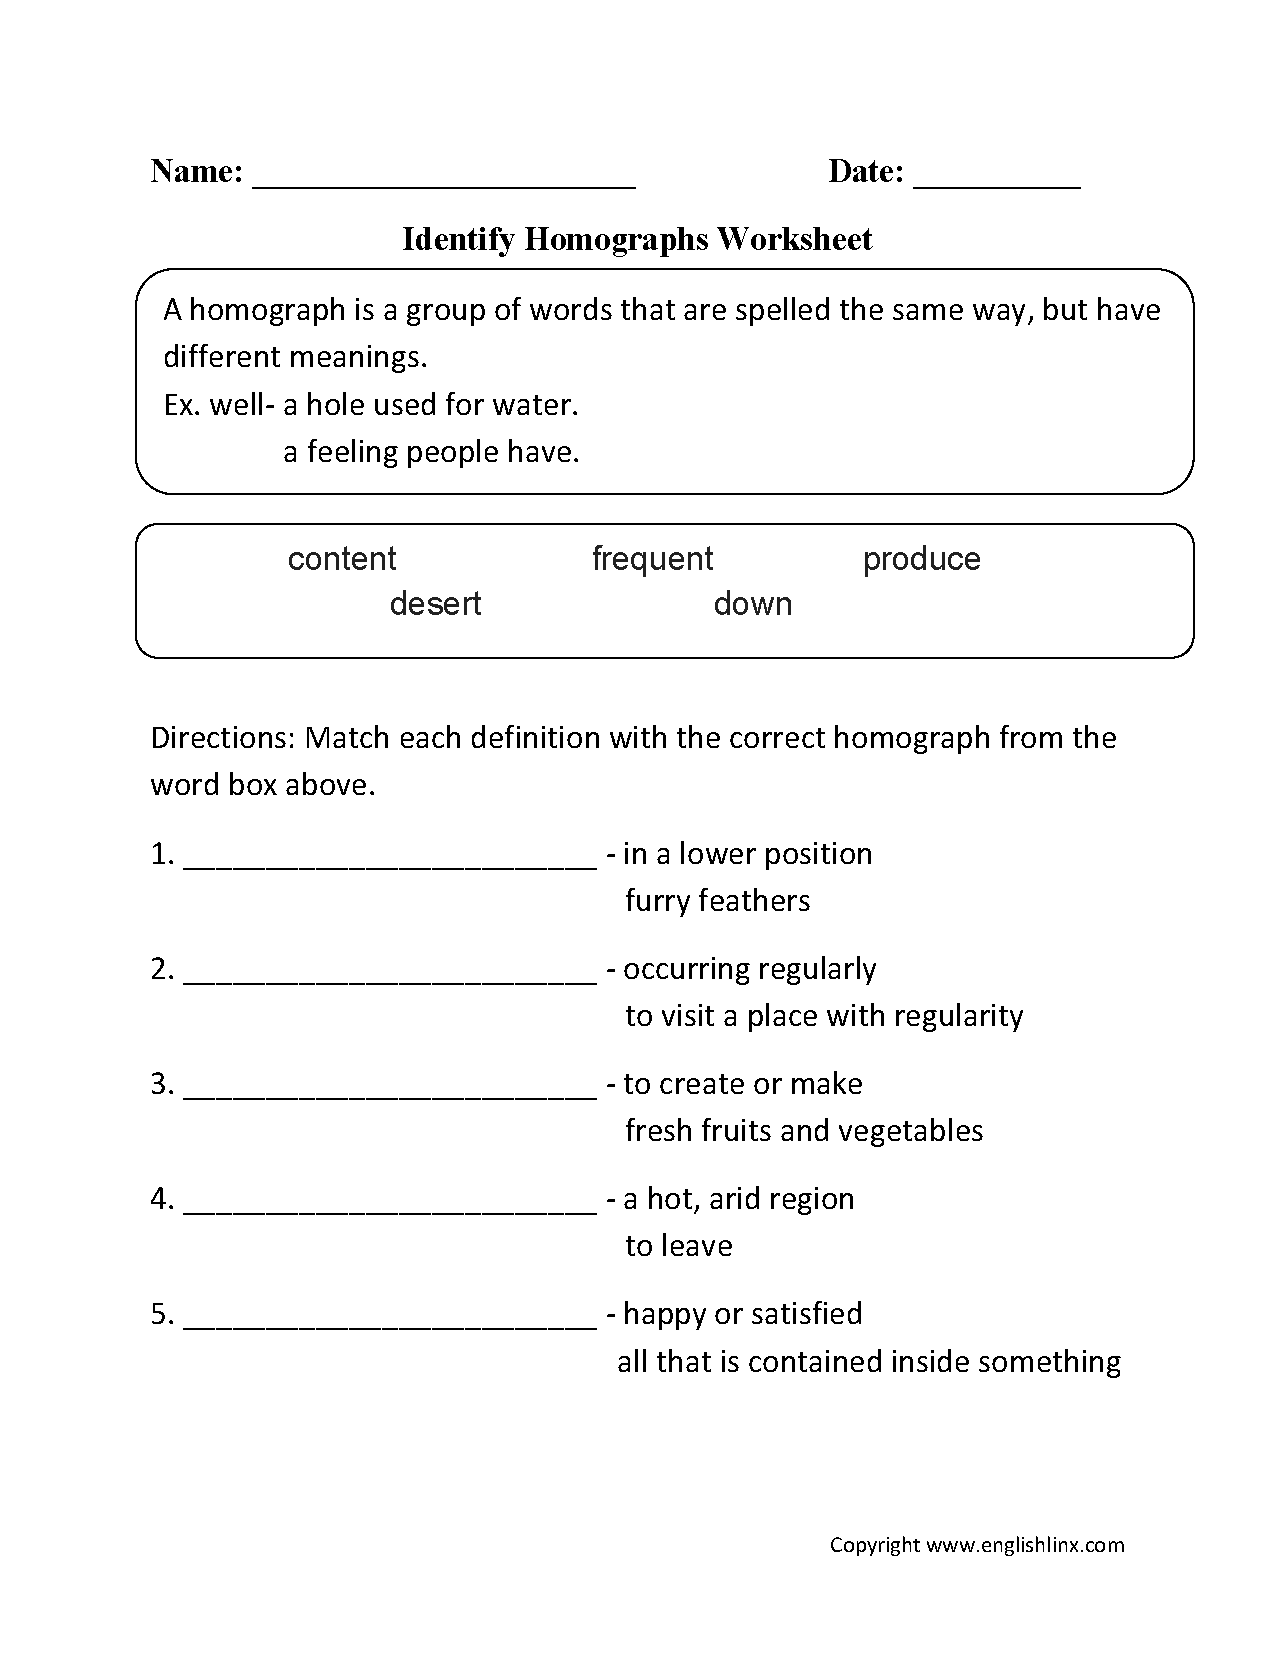 Identify Homographs Worksheet